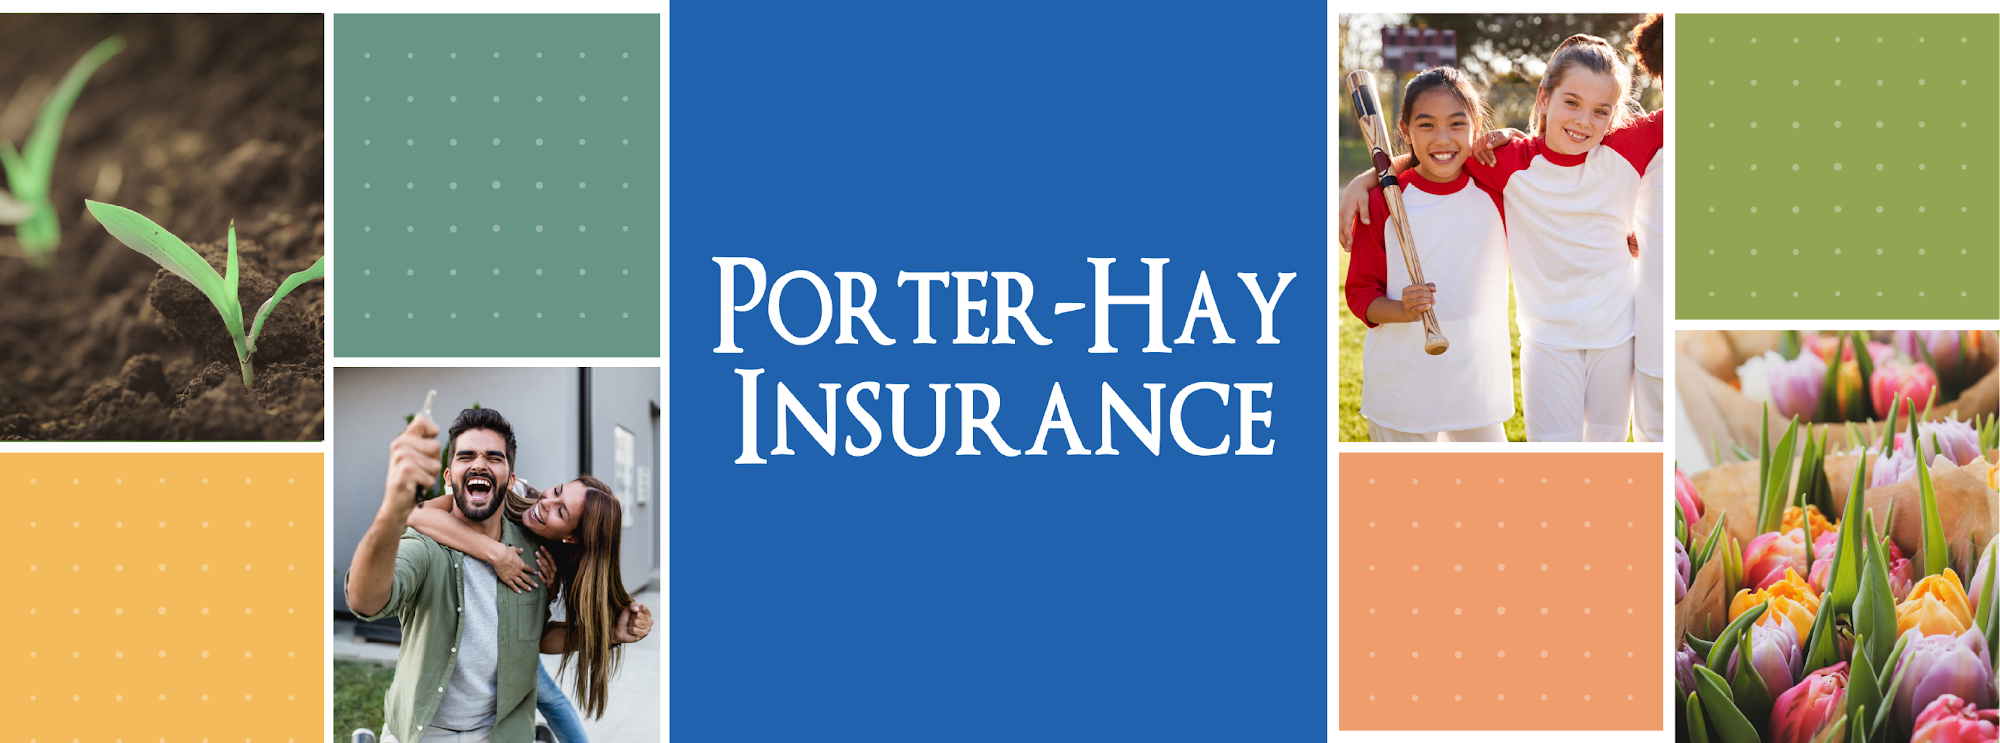 Porter-Hay Insurance 200 E Broadway, Monmouth Illinois 61462